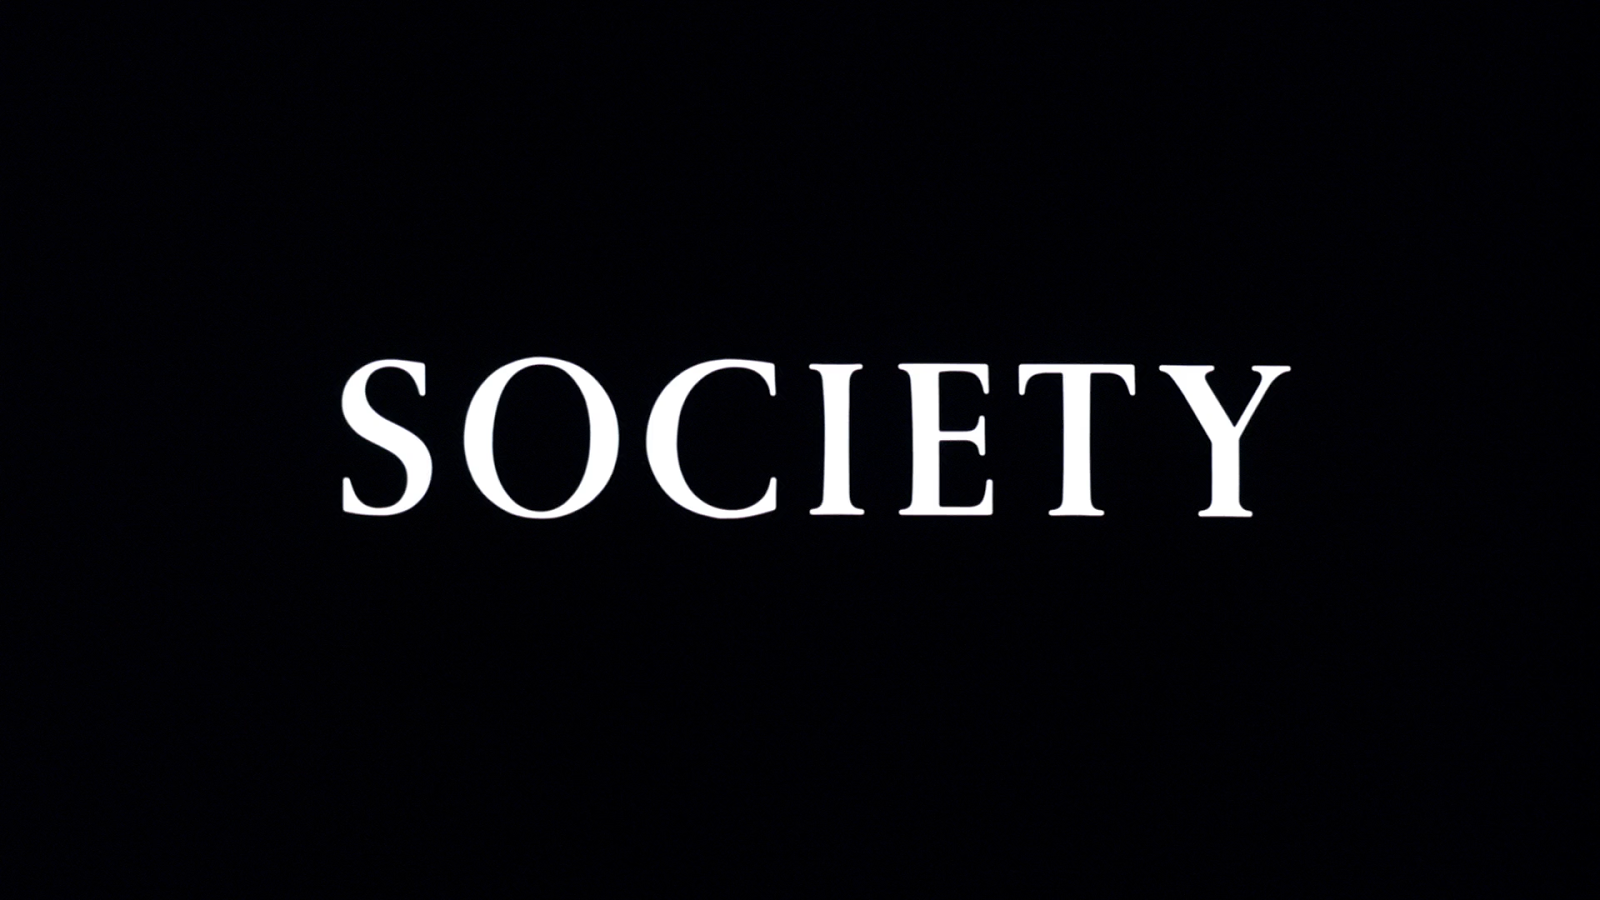 Me society